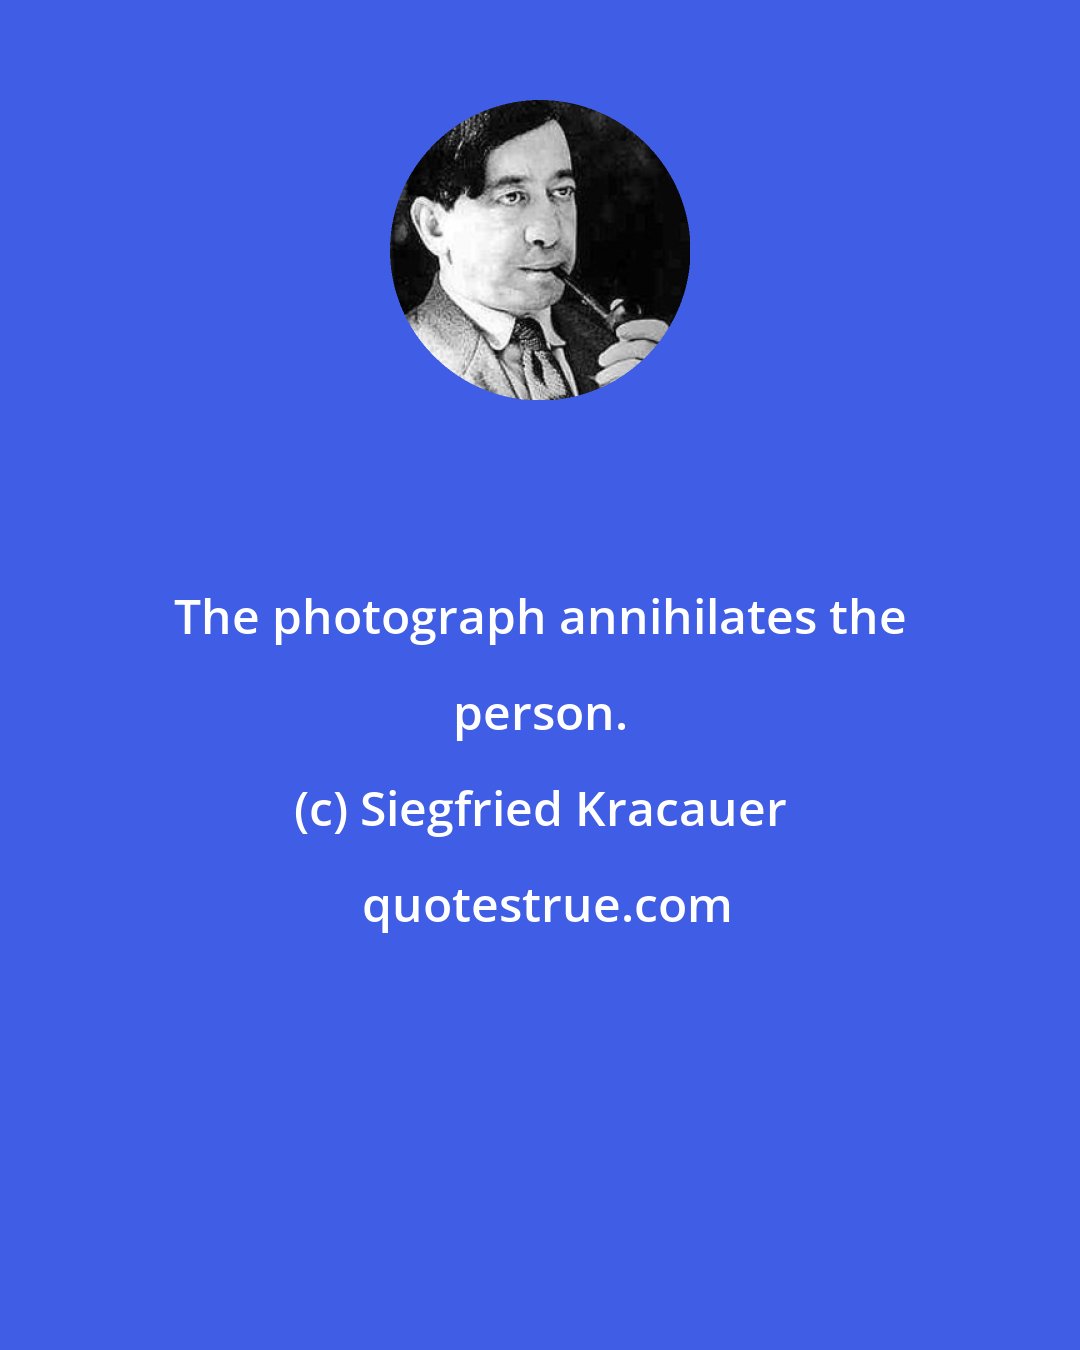 Siegfried Kracauer: The photograph annihilates the person.